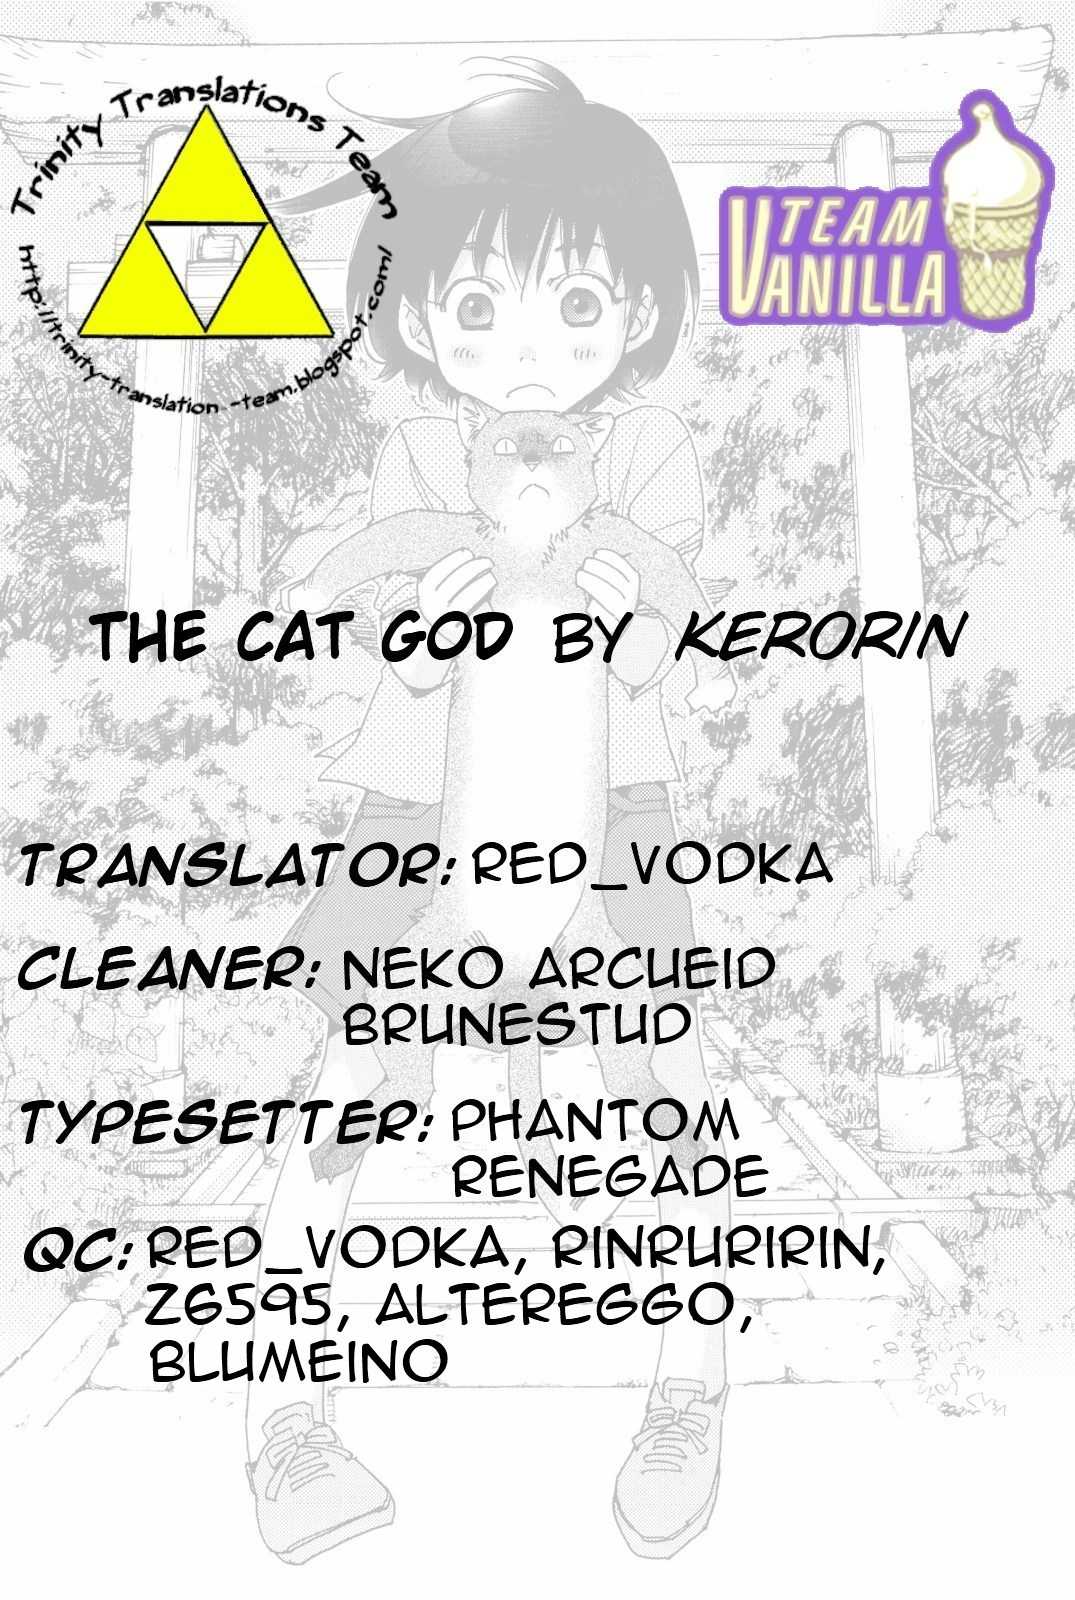 [Kerorin] The Cat God (English) [Team Vanilla + Trinity Translations Team] 